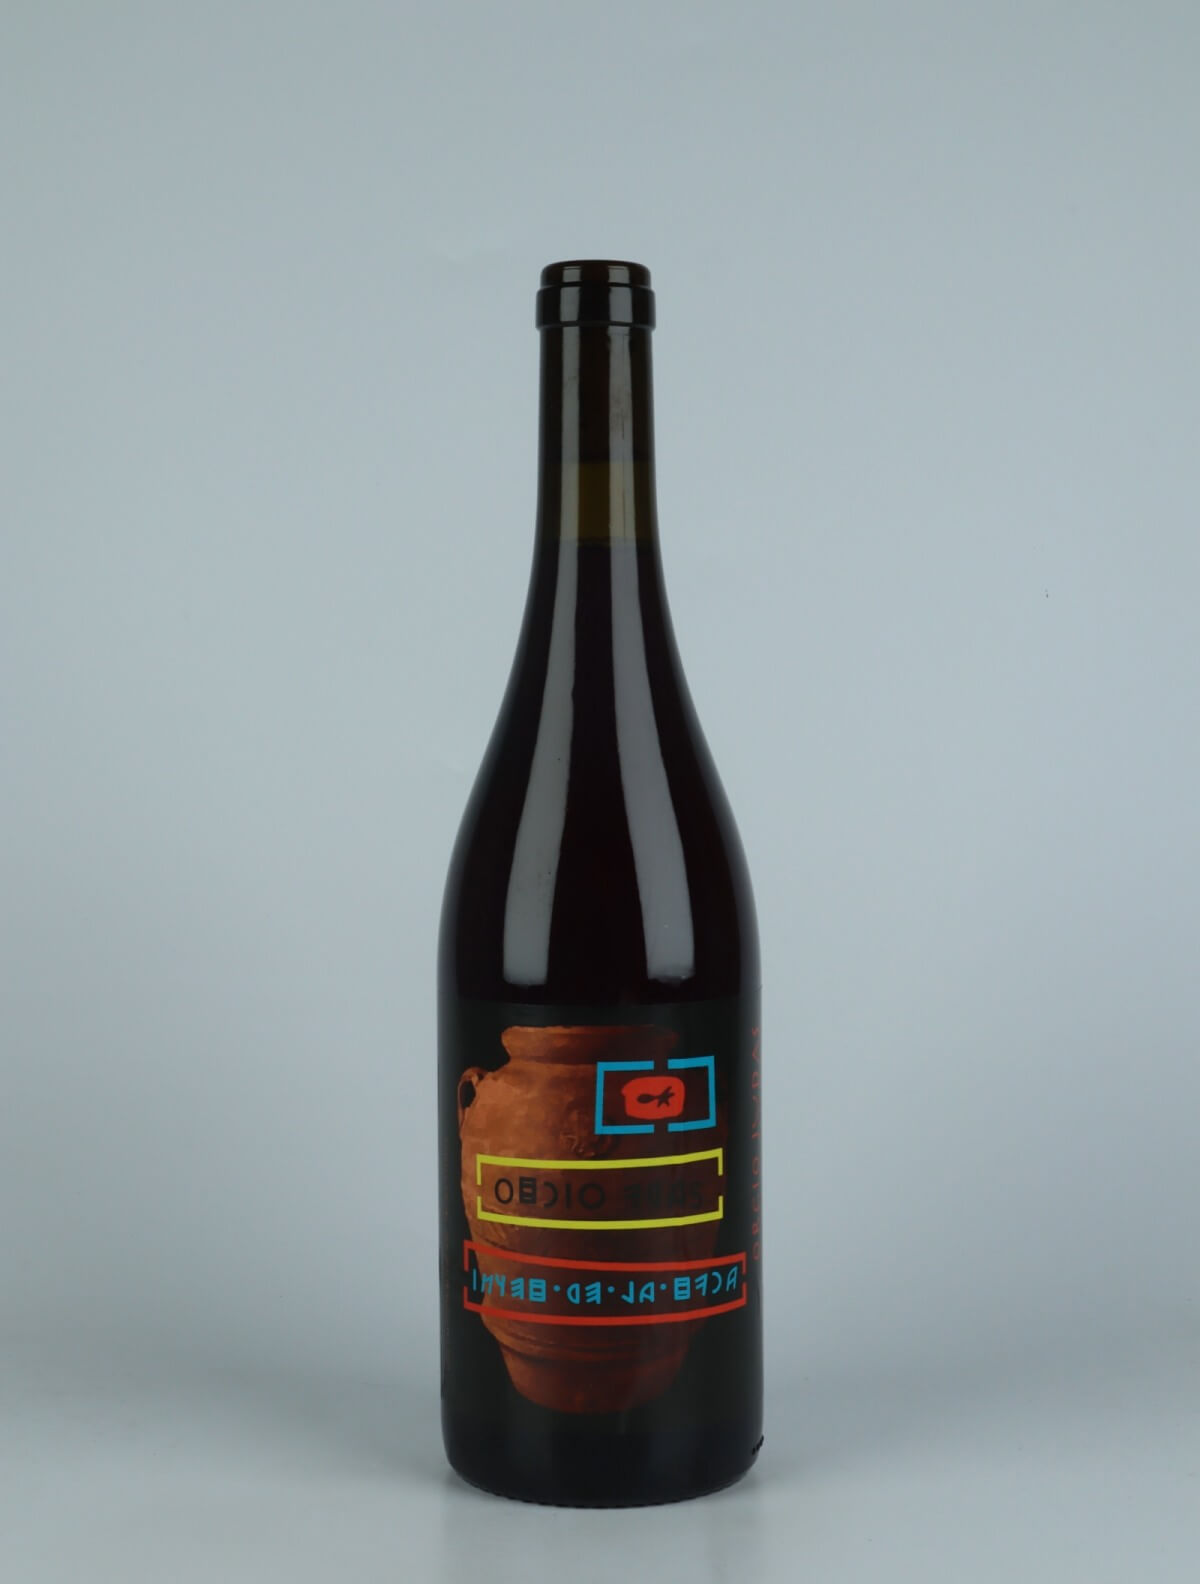 A bottle 2022 Orcio Judas Red wine from Vinyer de la Ruca, Rousillon in France